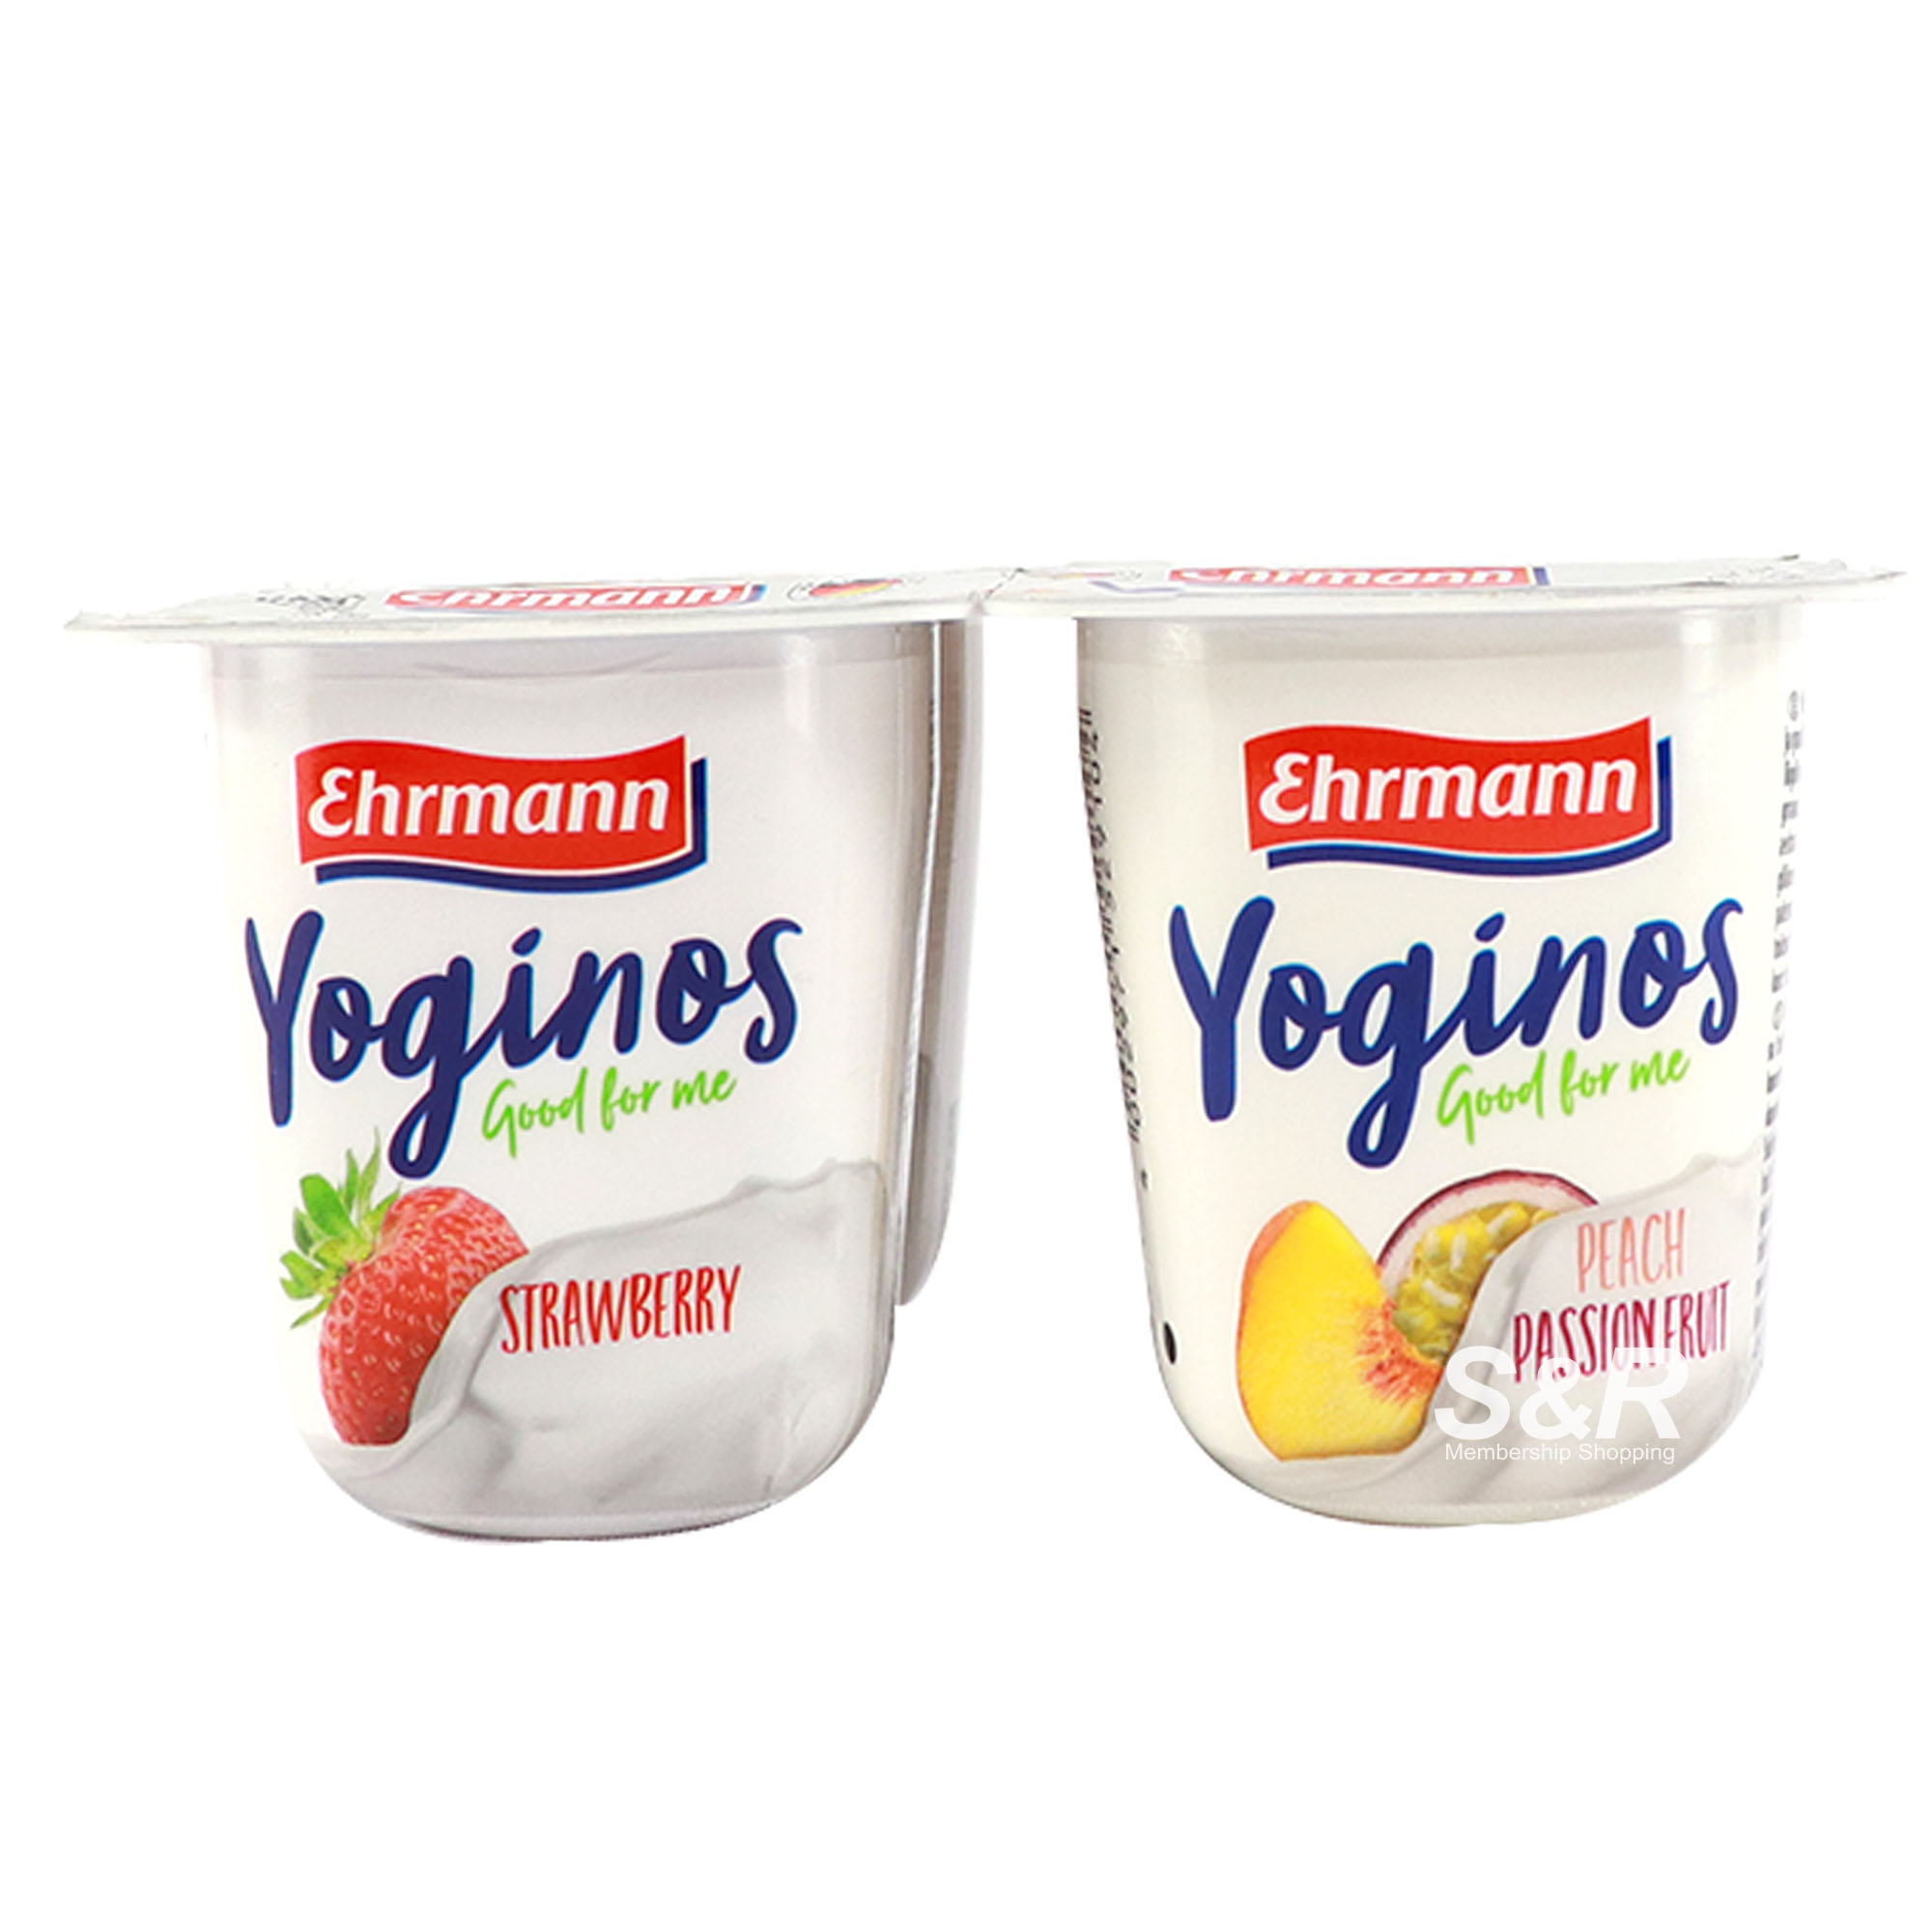 Ehrmann Yoginos Good for Me Frozen Yogurt Strawberry and Peach Passion Fruit Flavors 4pcs